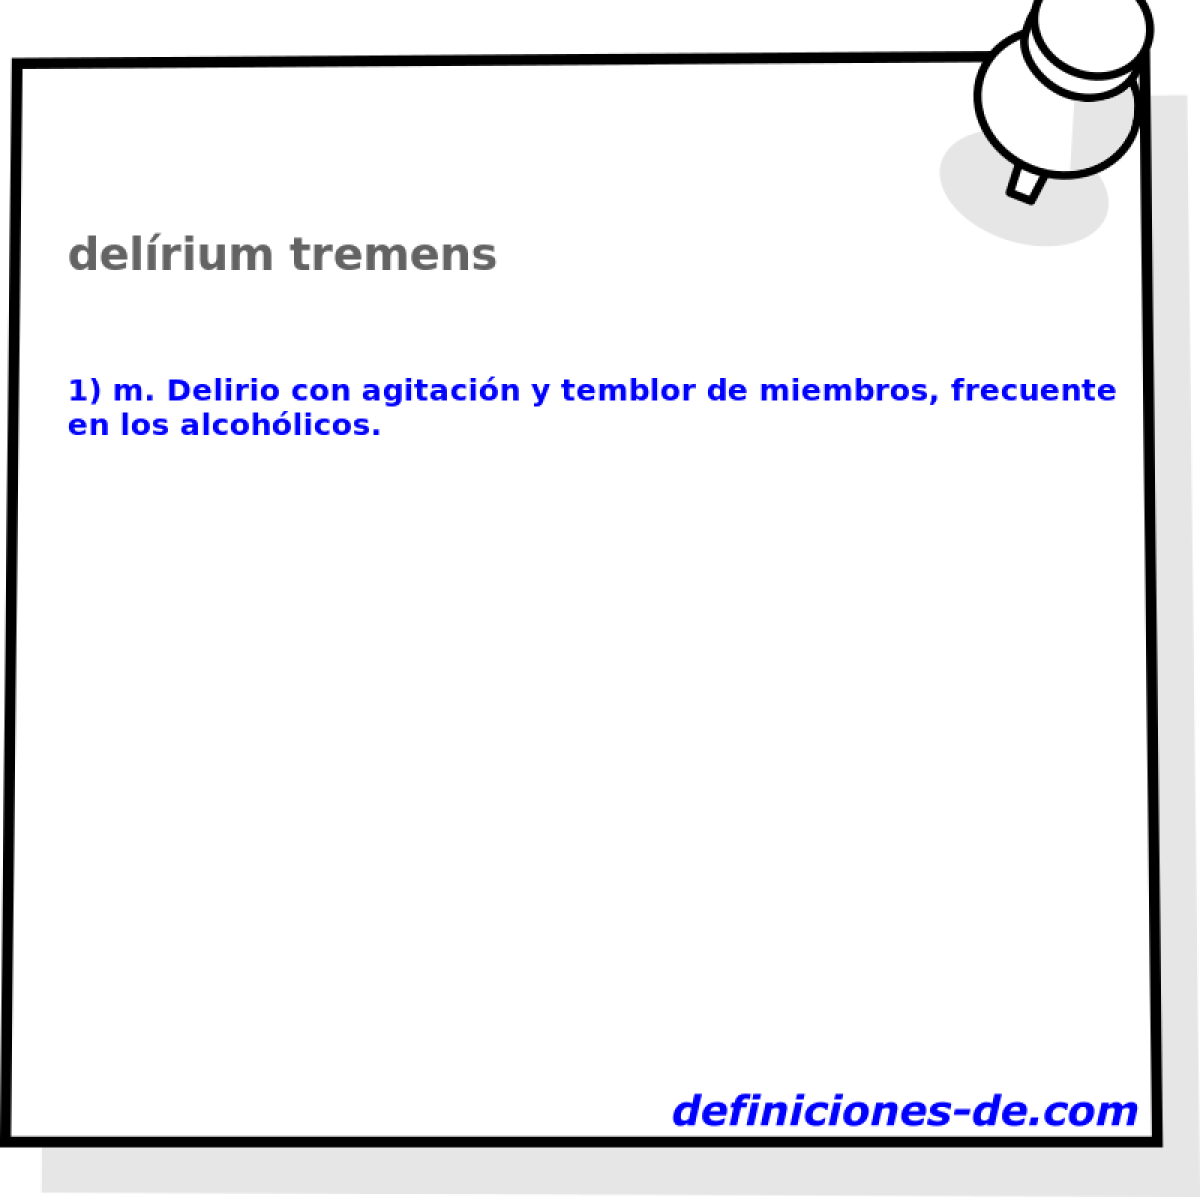 delrium tremens 